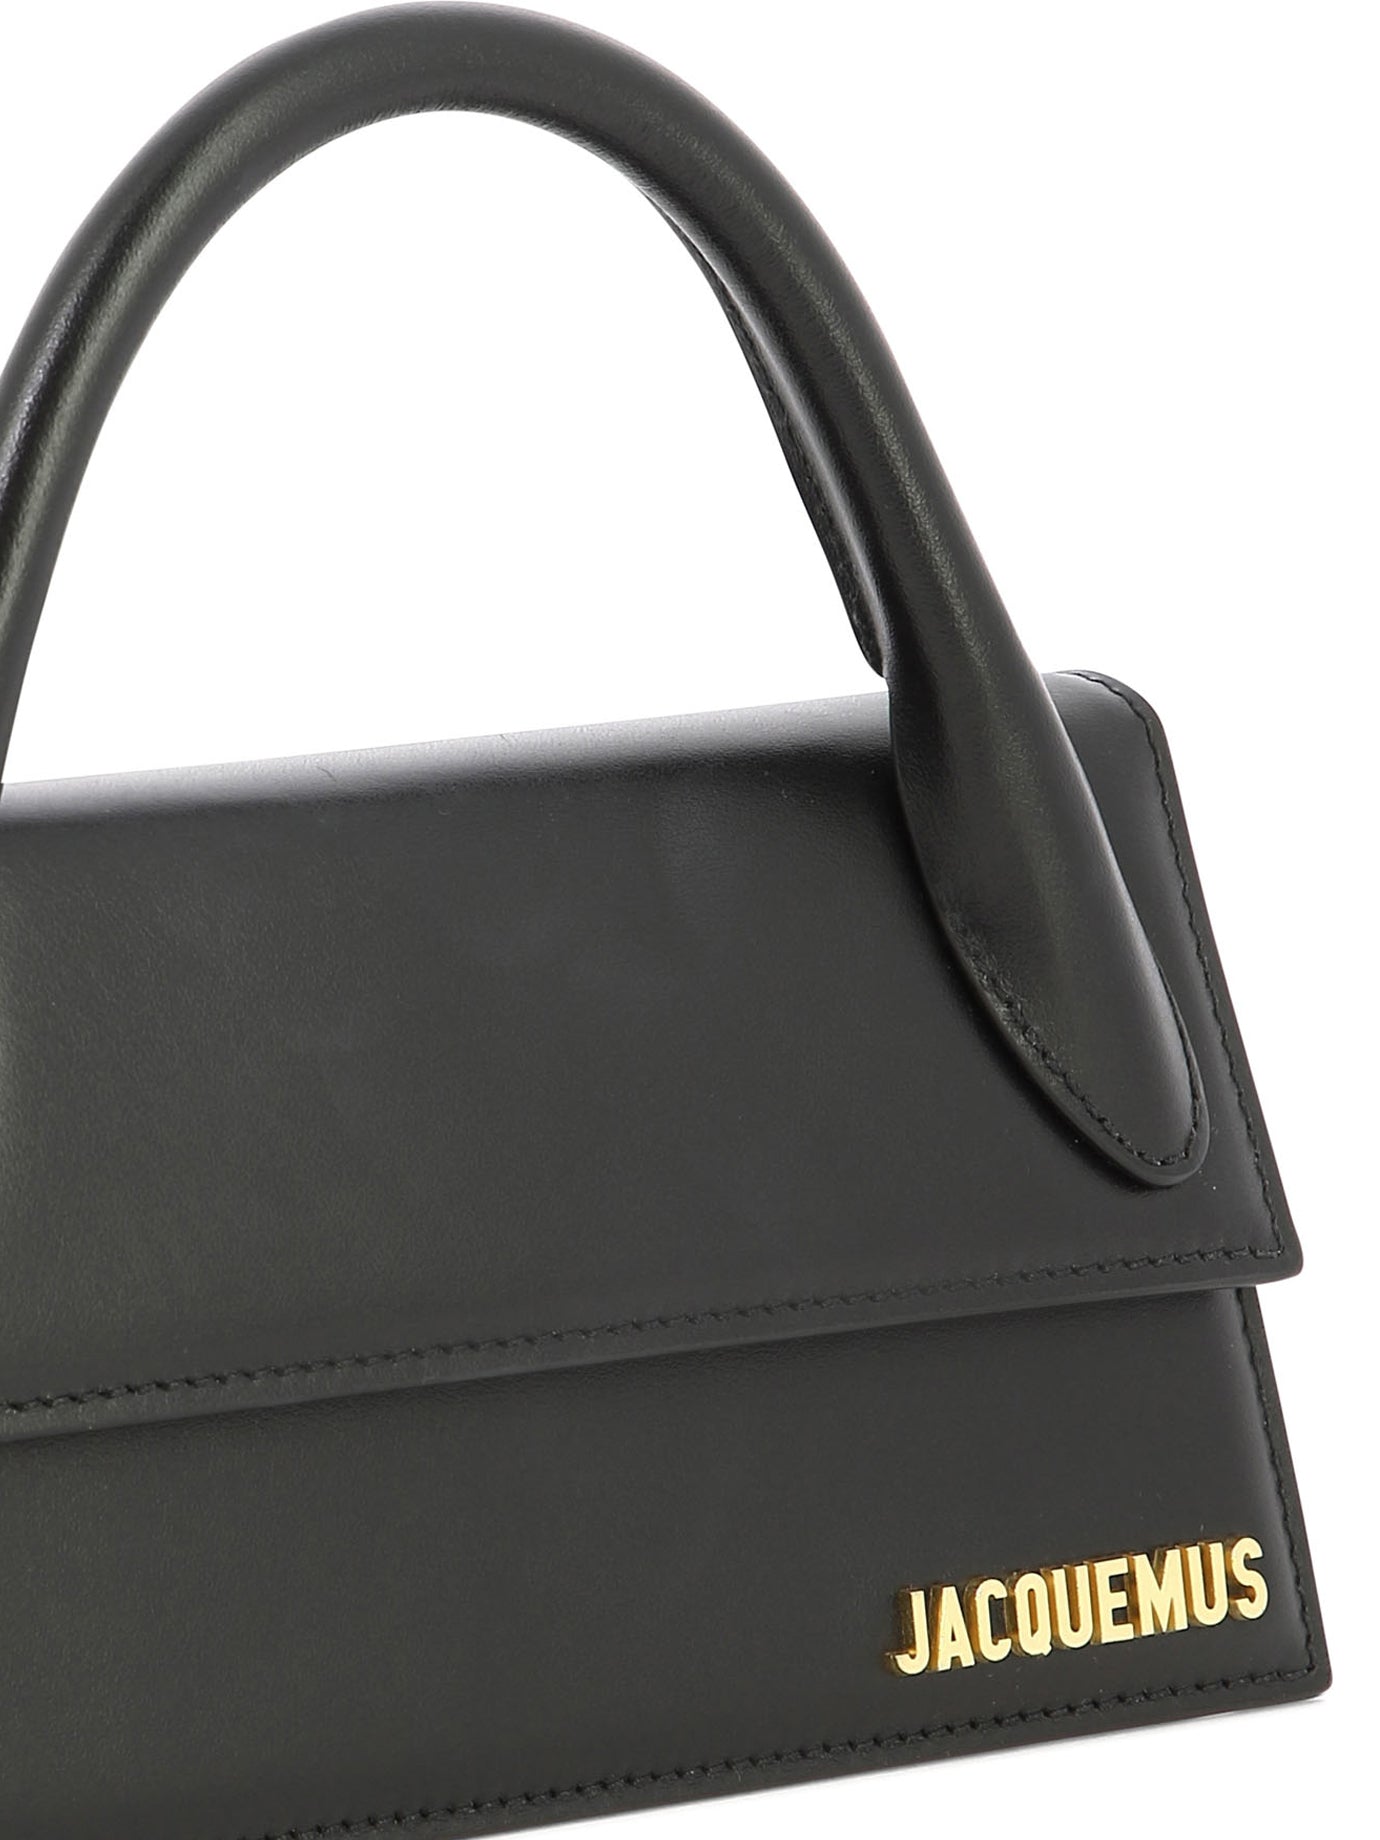 Le Chiquito Long Leather Shoulder Bag in Black - Jacquemus